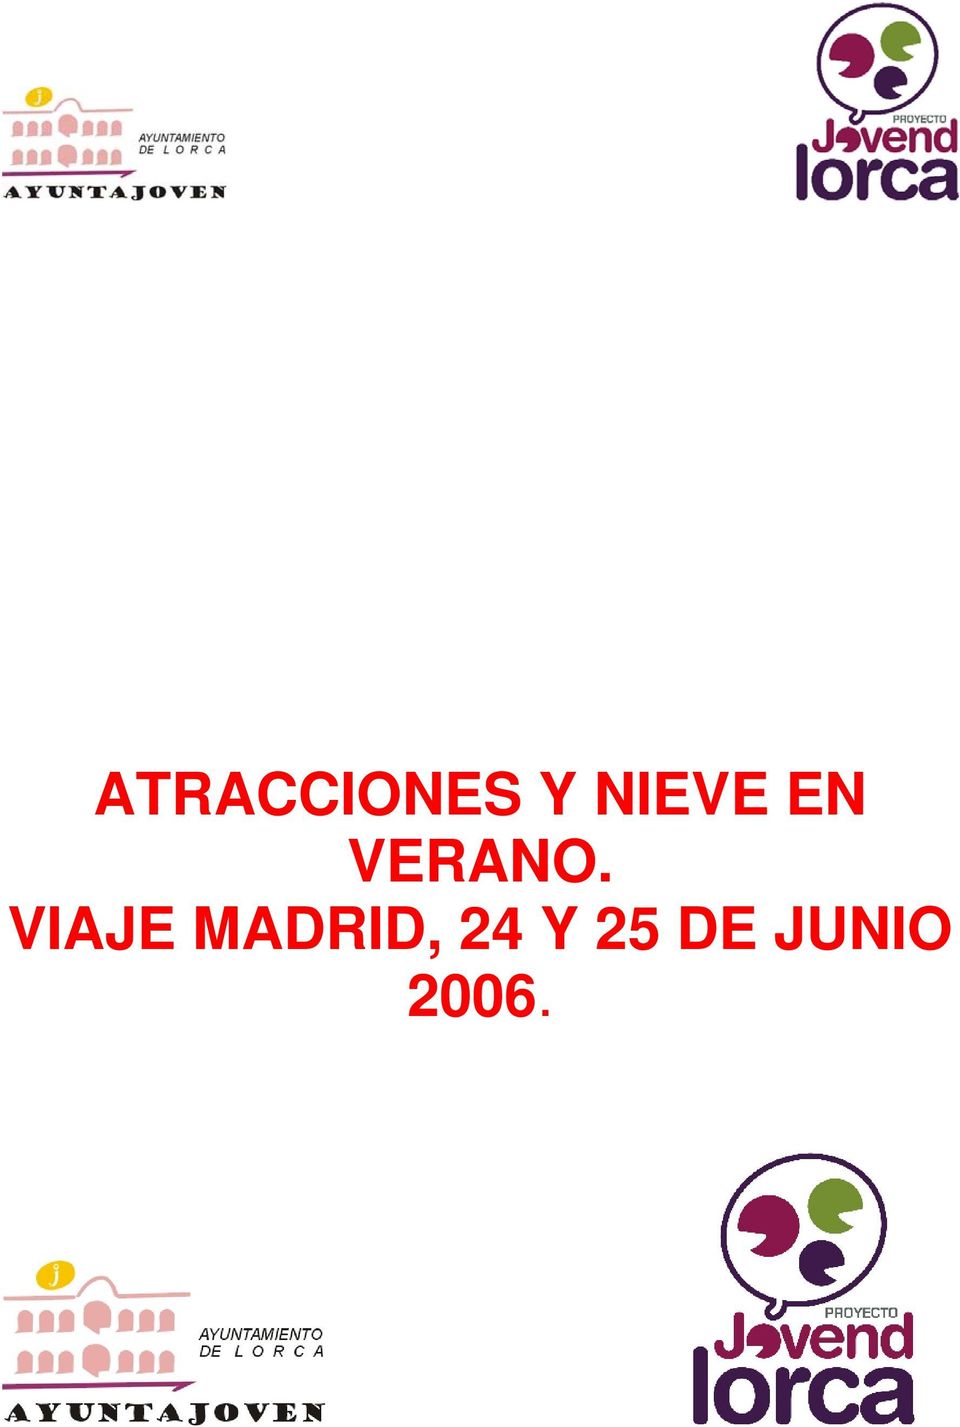 VIAJE MADRID, 24